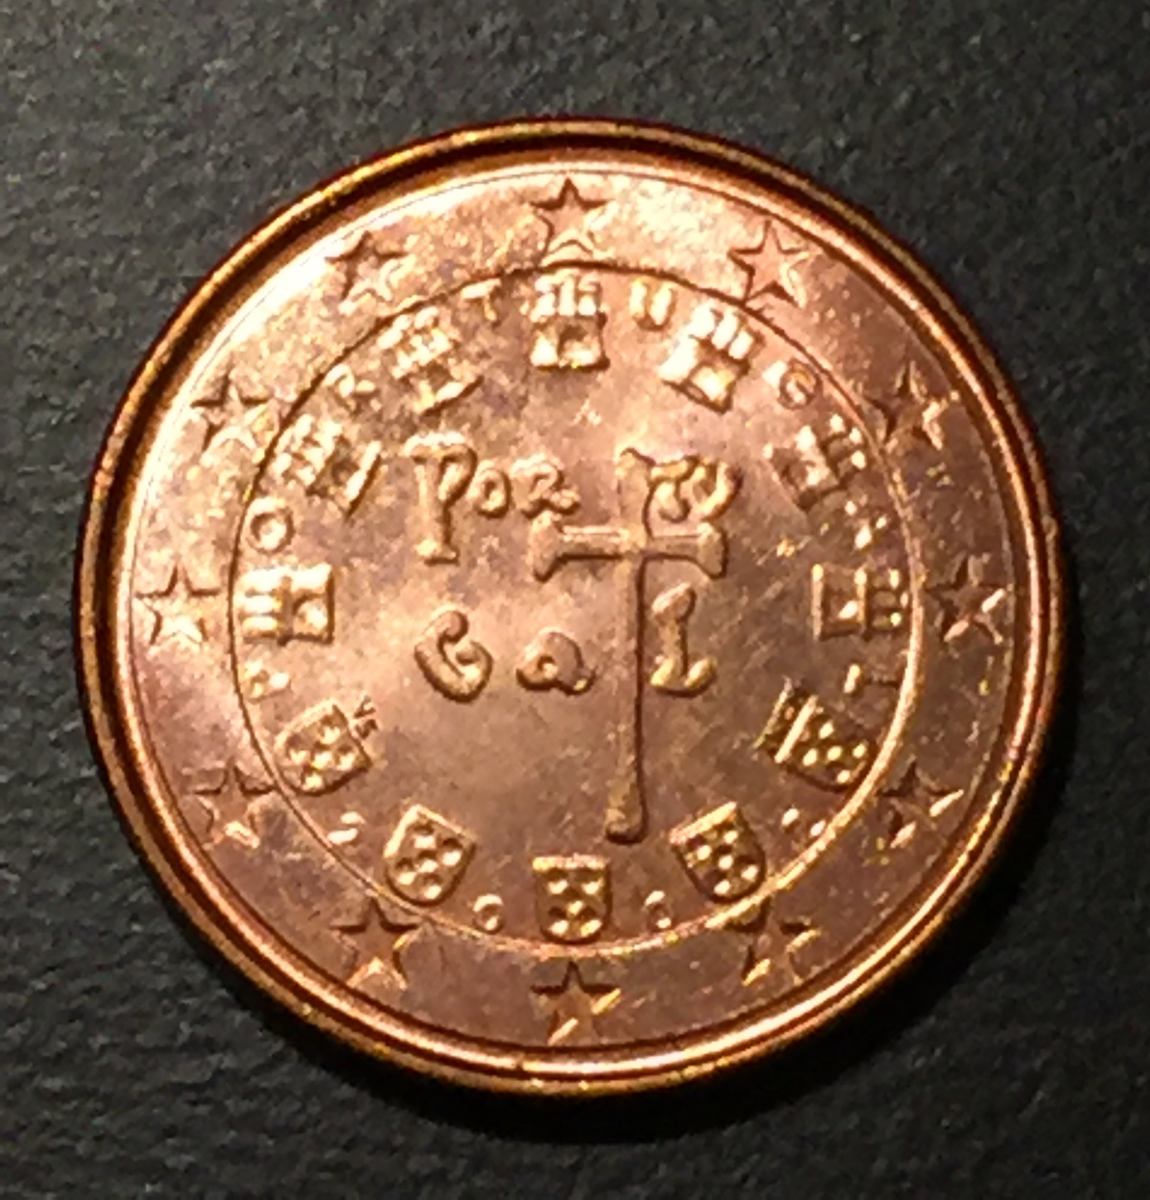 Por044 Moneda Portugal 1  Euro  Cent 2002 Unc bu Ayff 25 